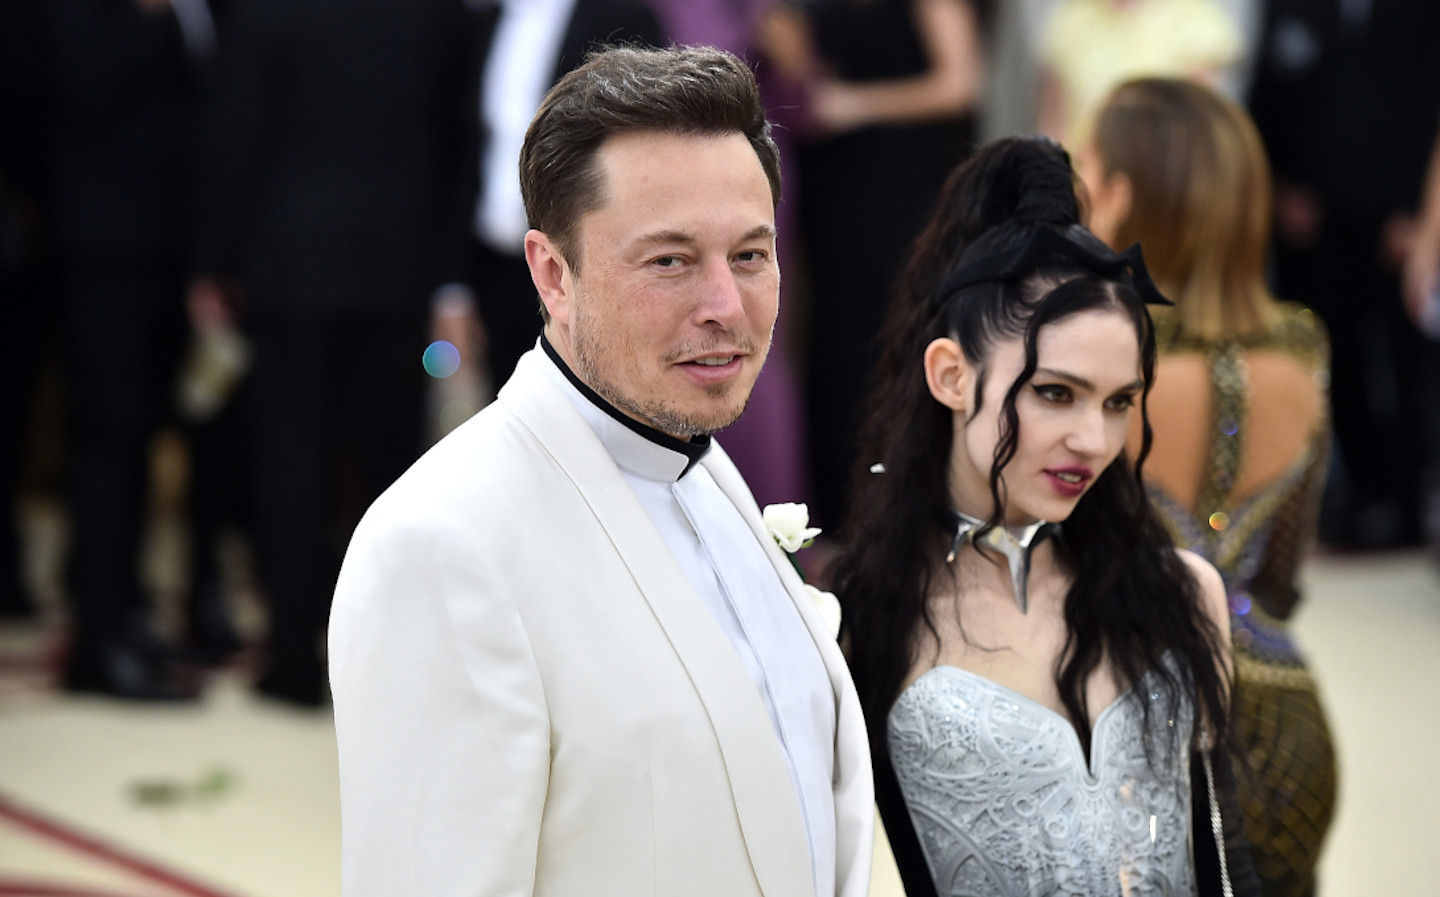 Has Elon Musk named his child X Æ A-12?